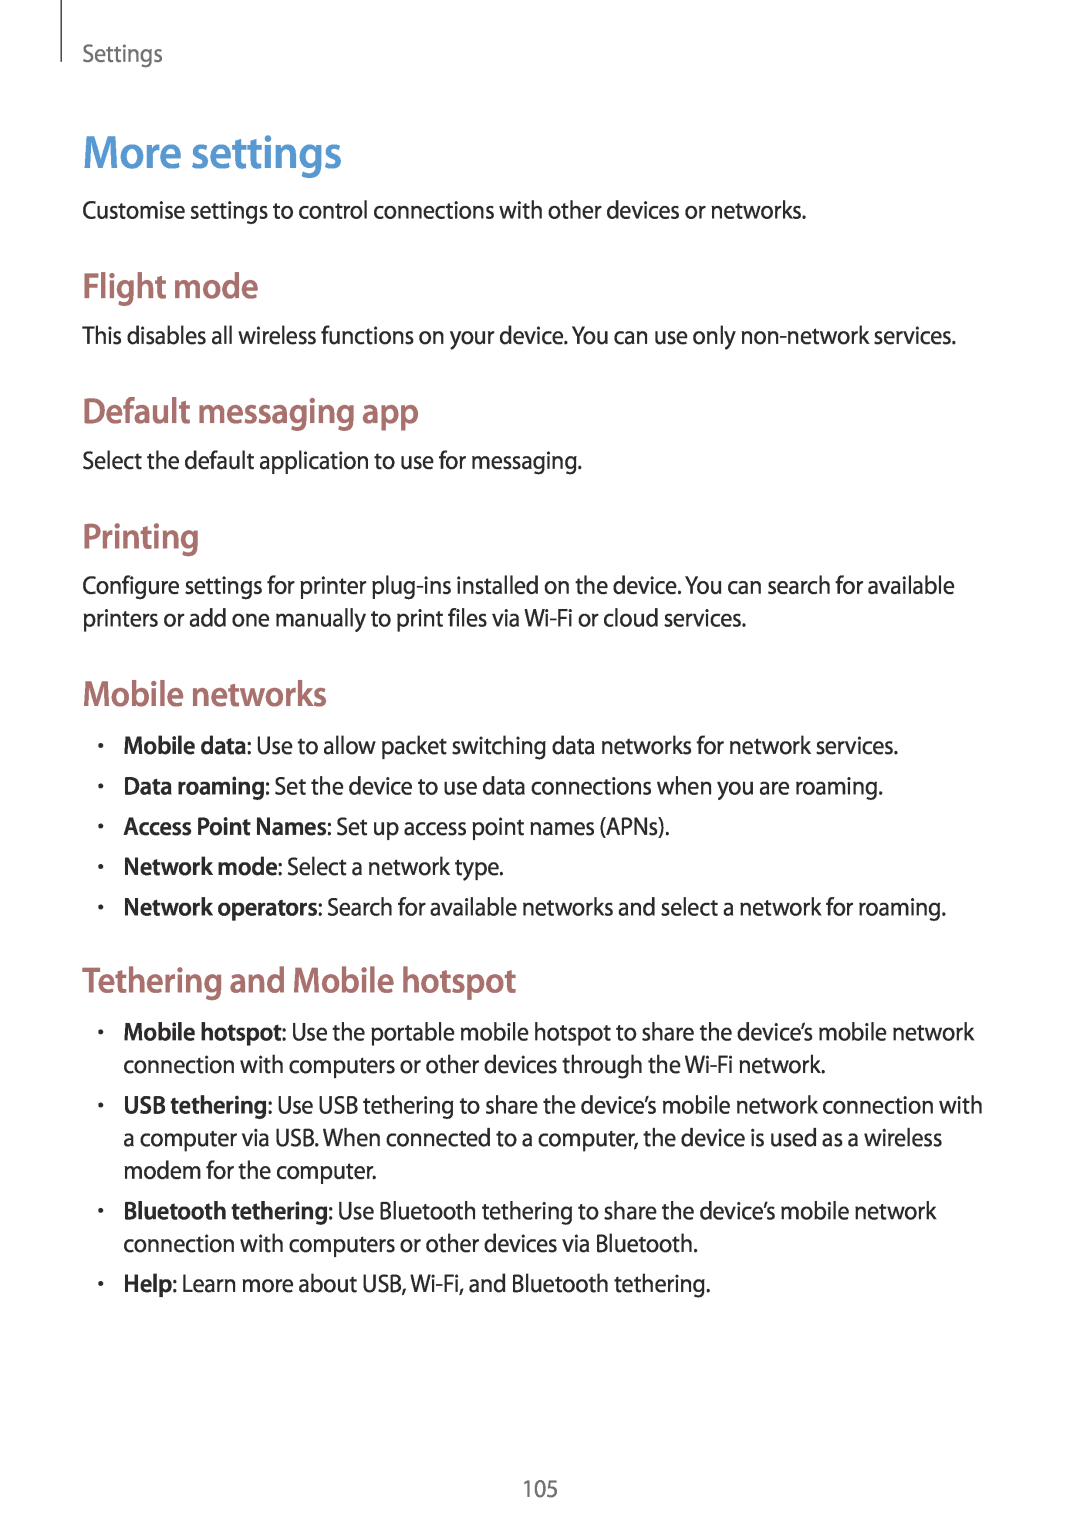 Samsung GT-N8000EAAWIN manual More settings, Flight mode, Default messaging app, Printing, Mobile networks, Settings 